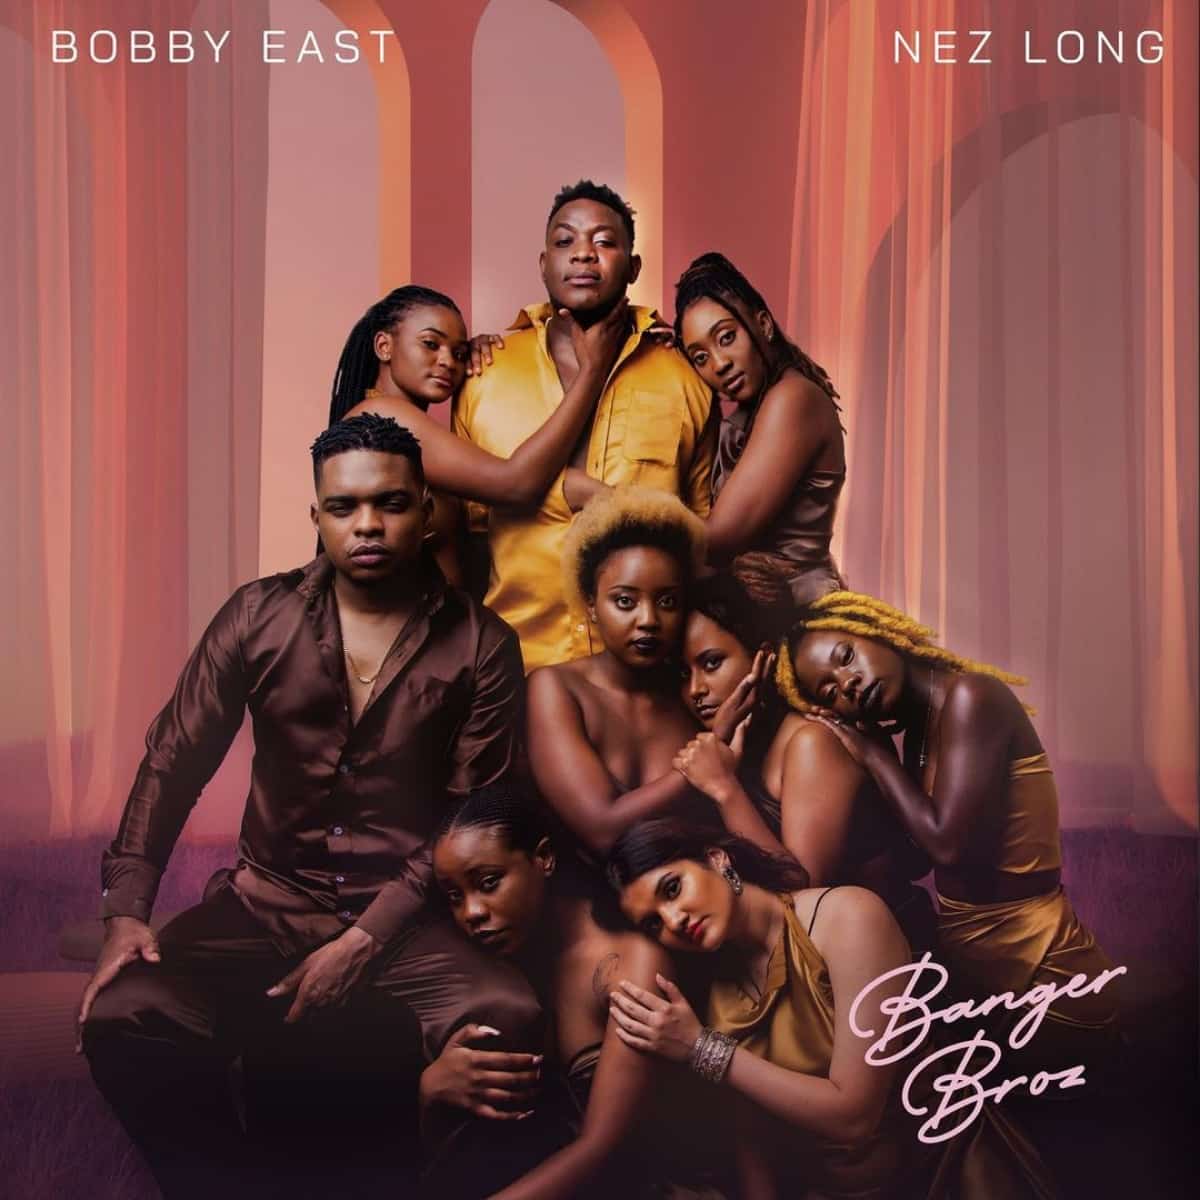 DOWNLOAD: Bobby East x Nez Long – “NBA” (Banger Bros) Mp3